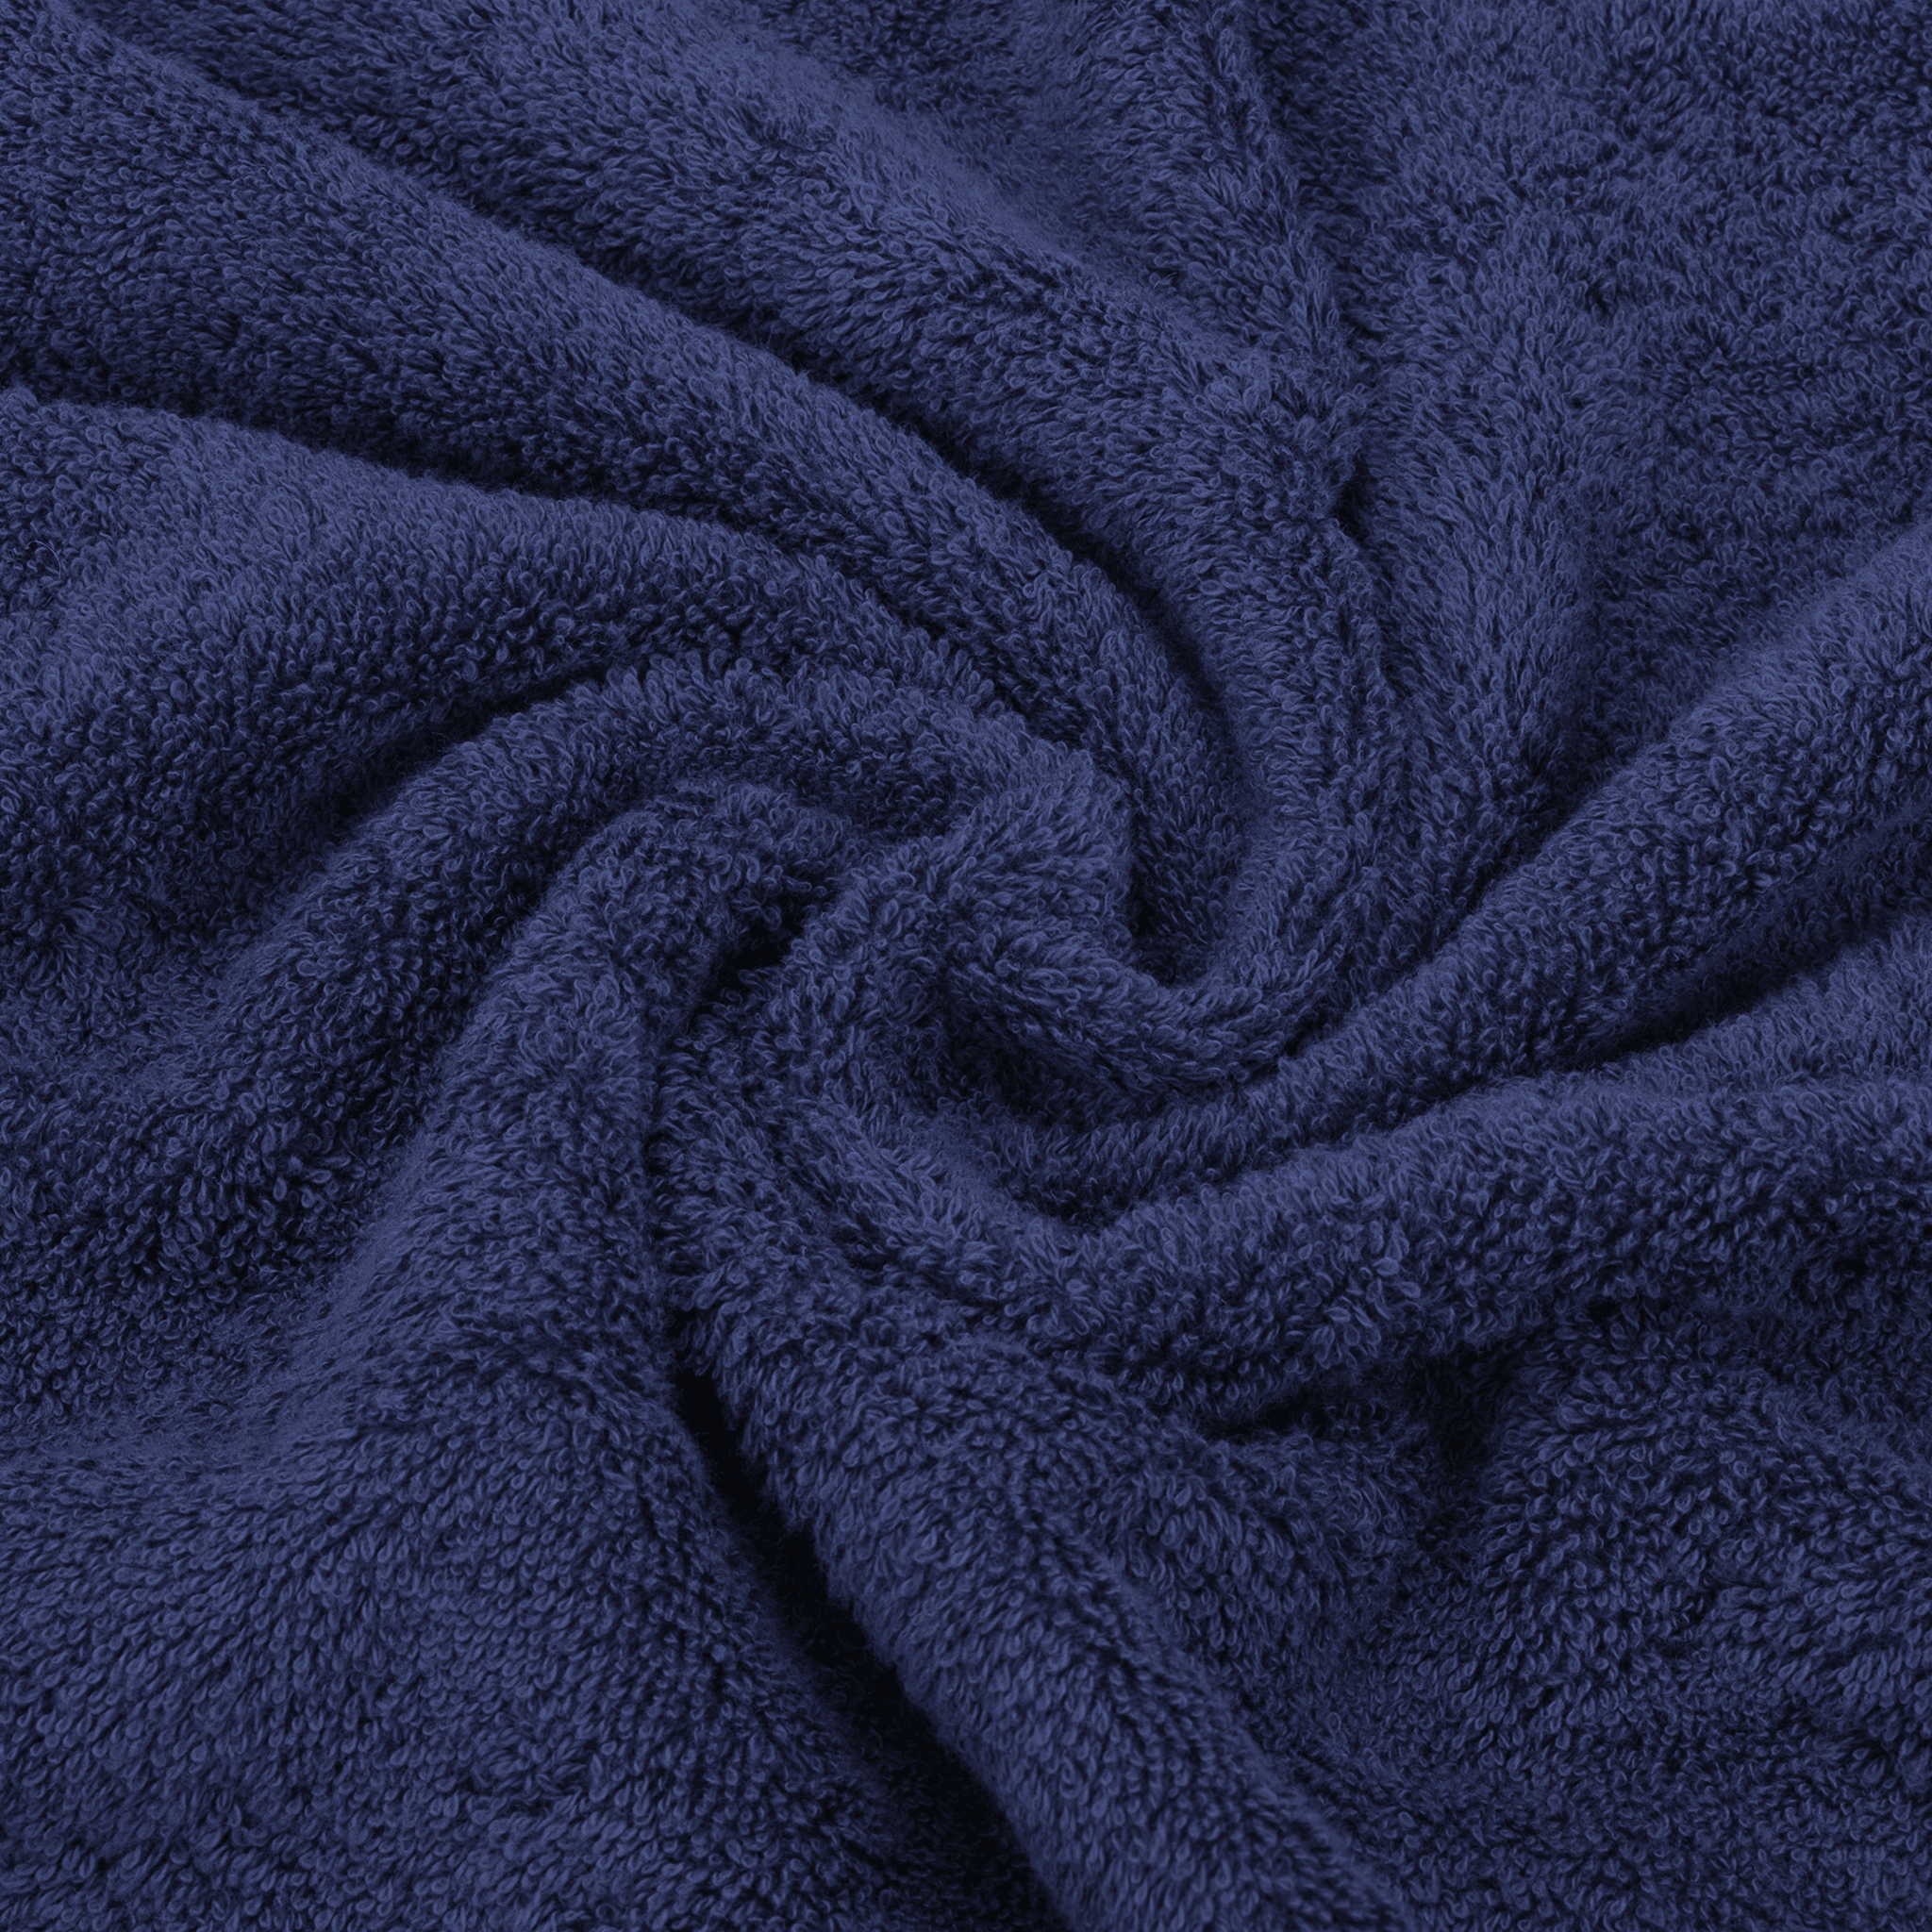 American Soft Linen Luxury 6 Piece Towel Set, by telemart01